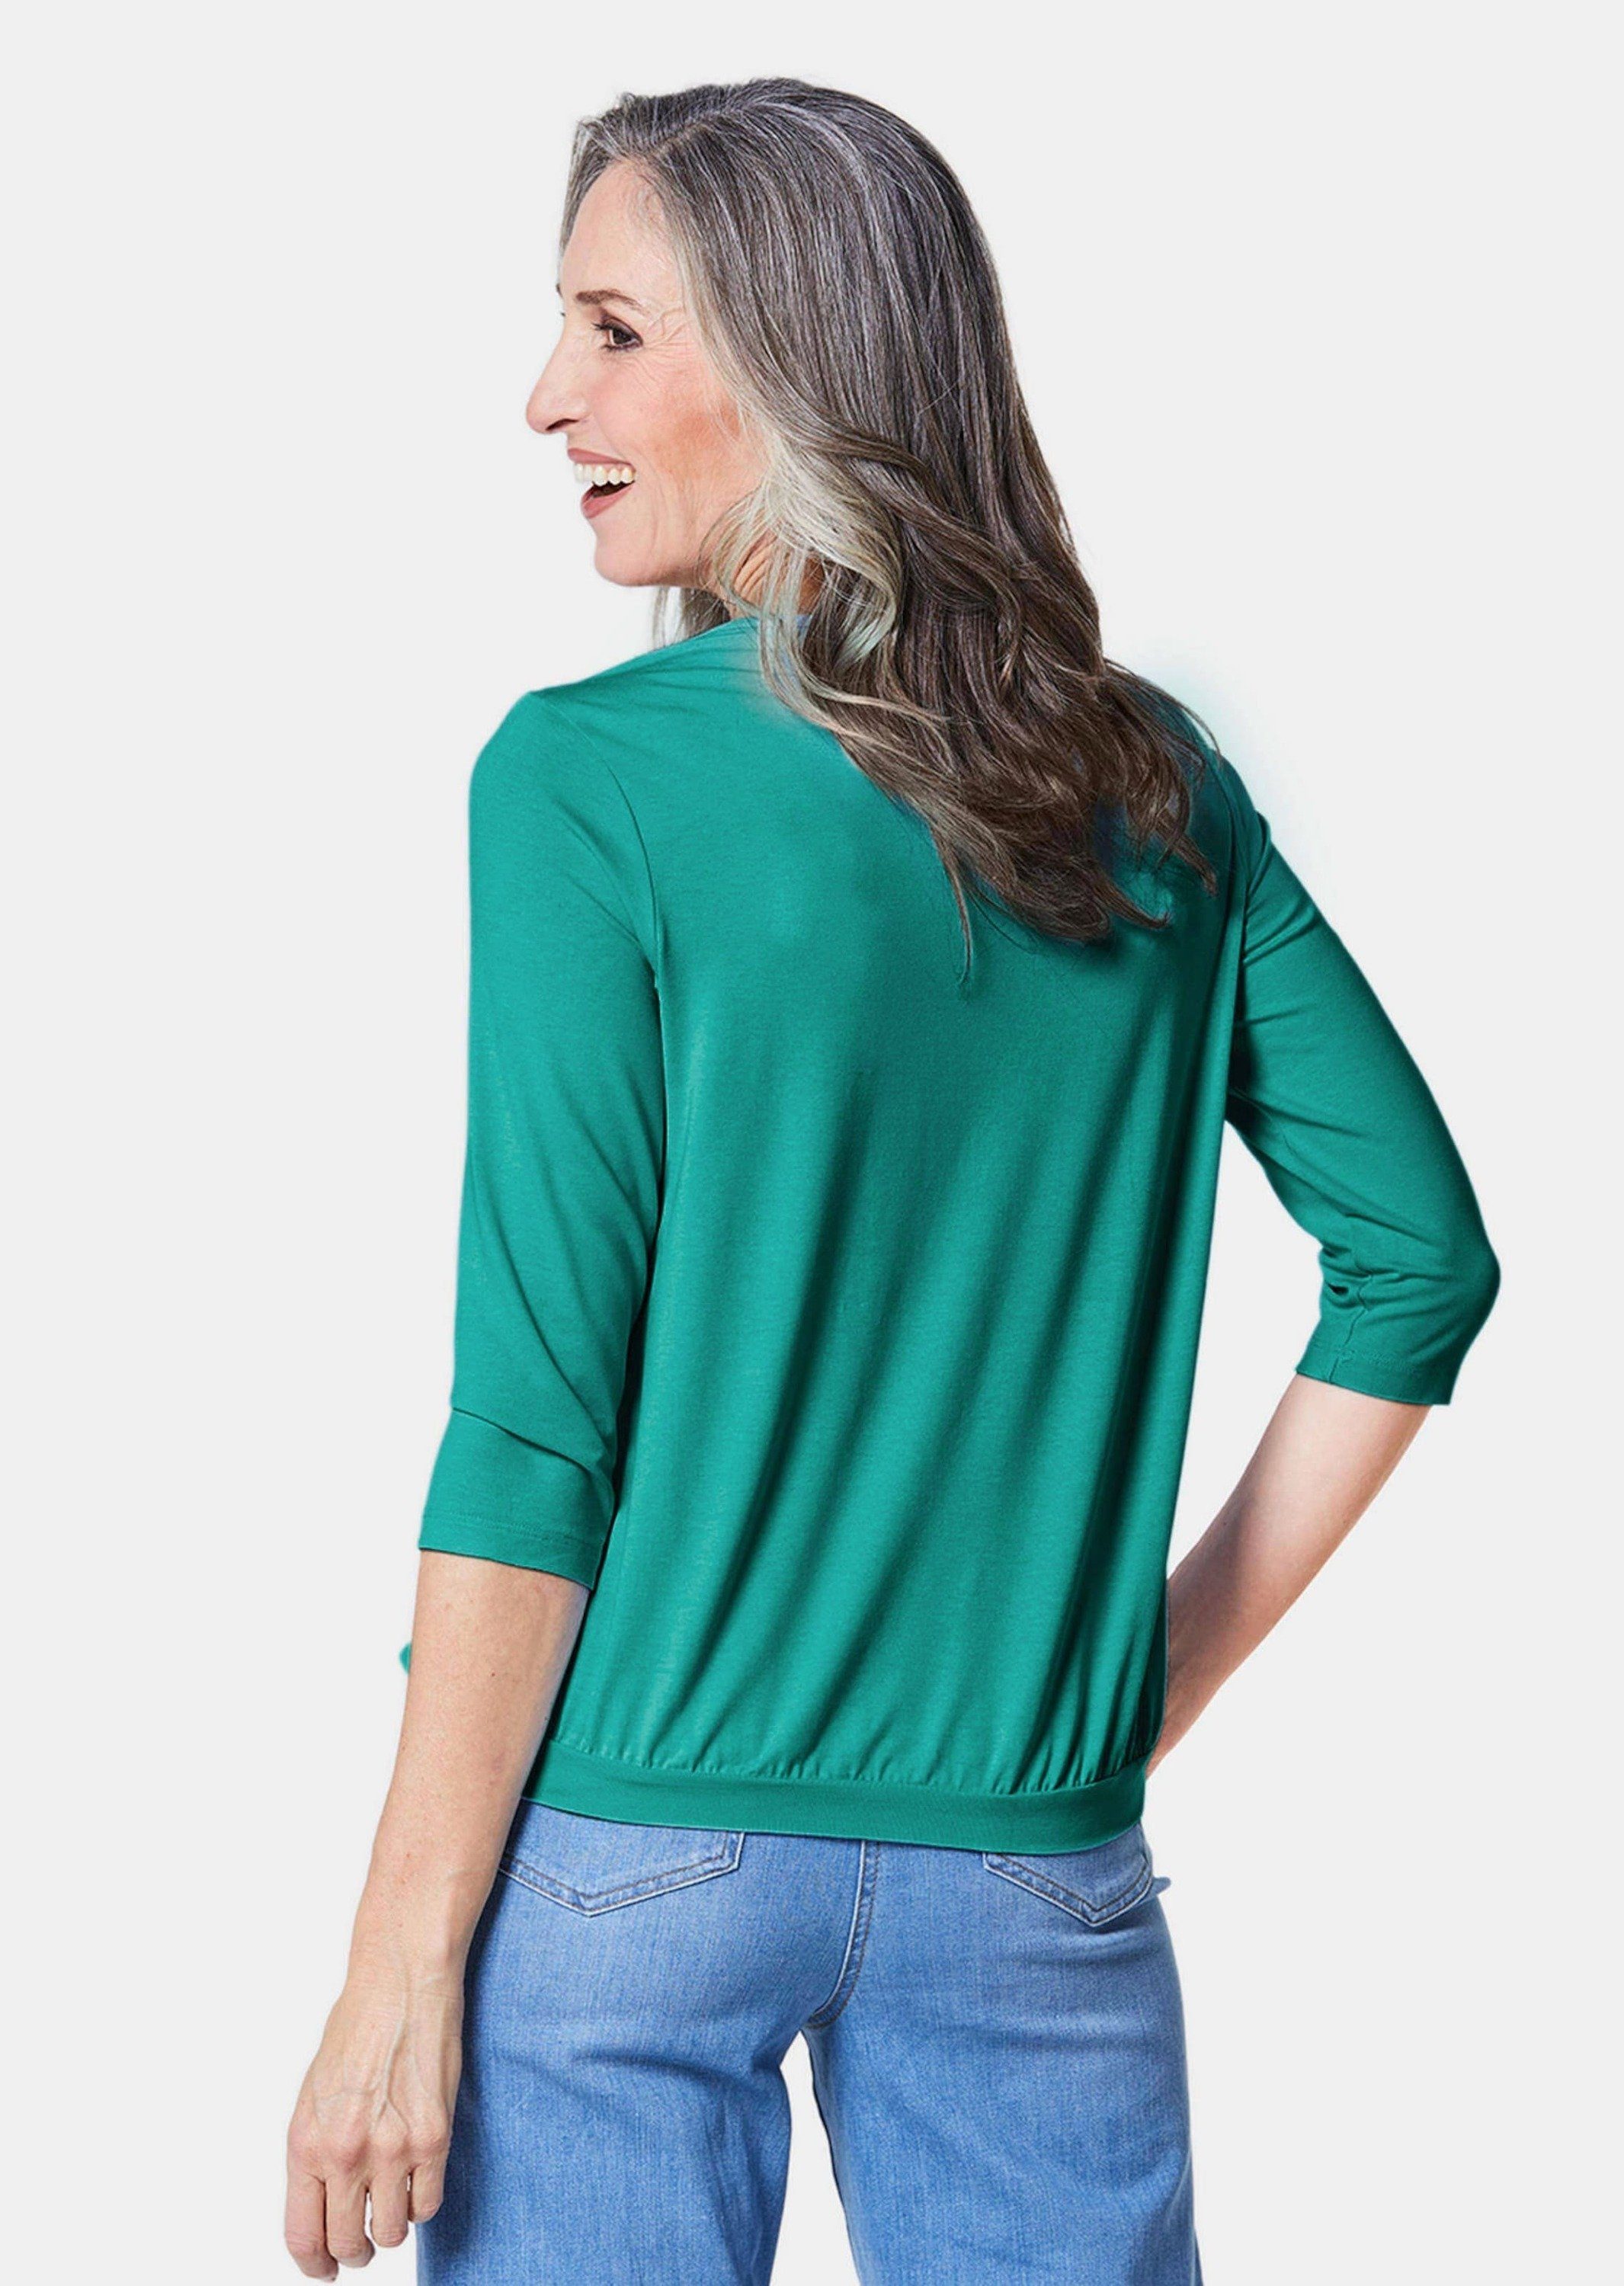 GOLDNER Kurzarmbluse Gepflegtes Shirt Blusen-Optik in eleganter smaragdgrün